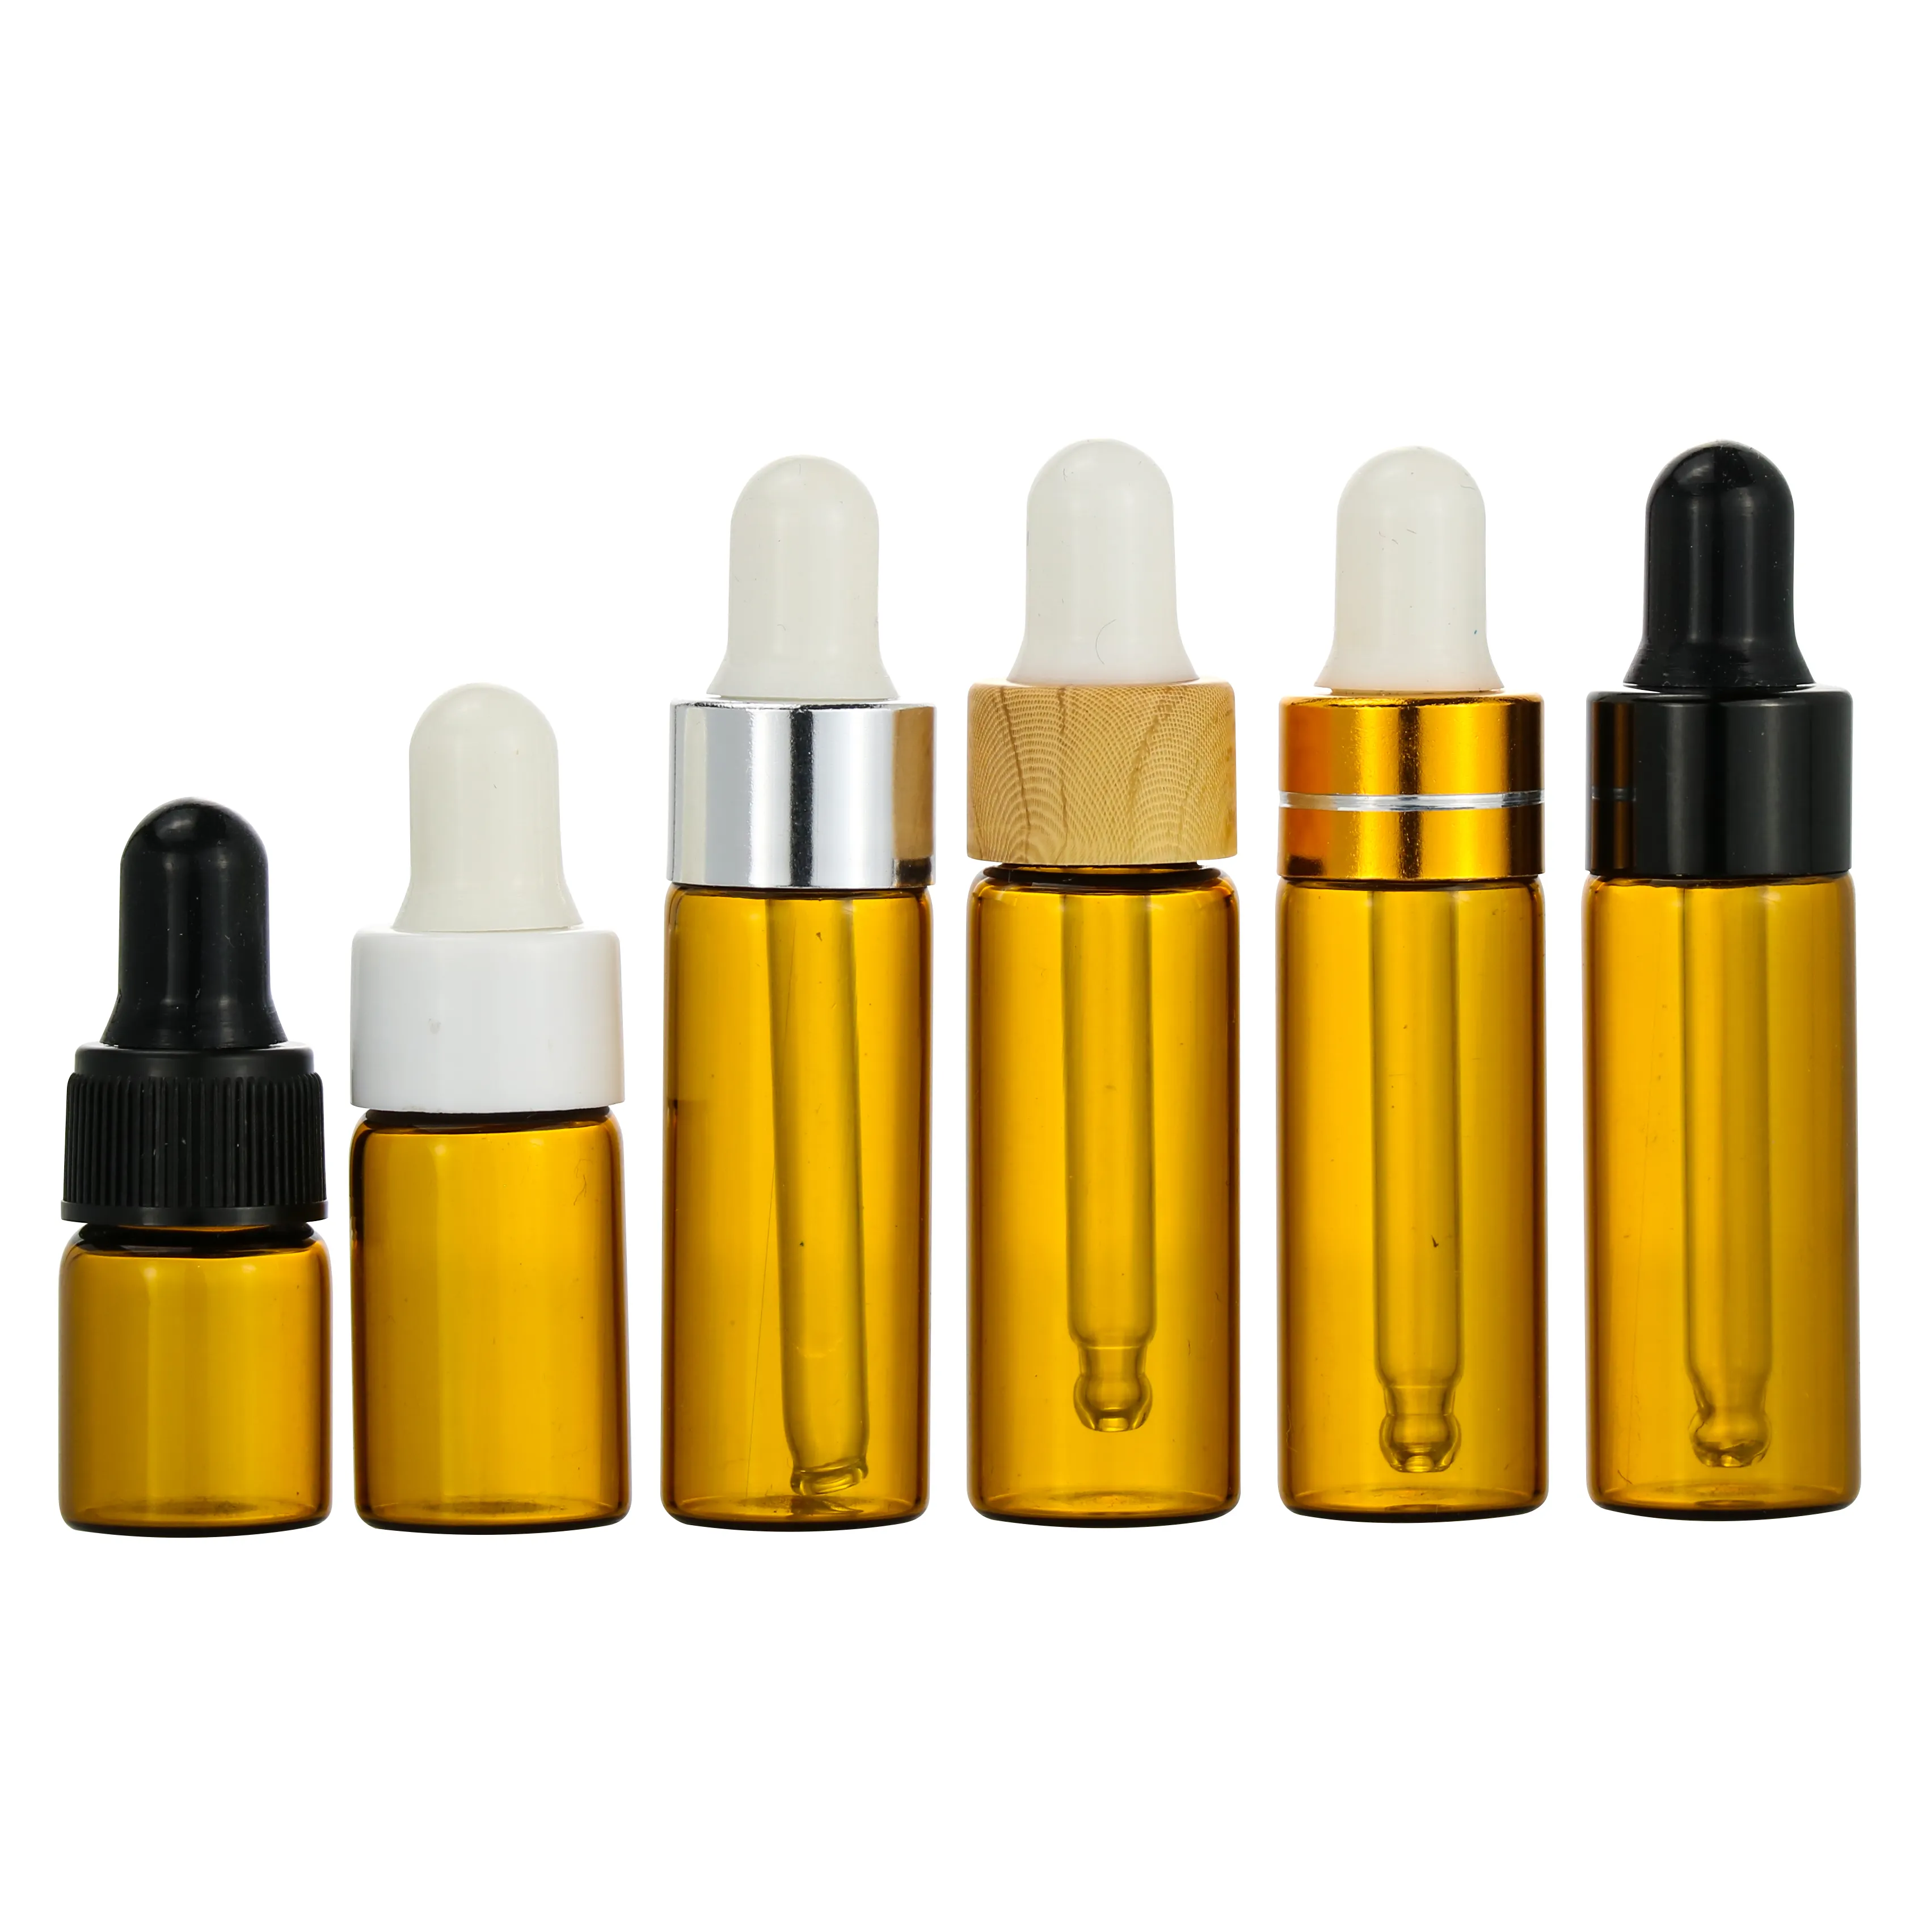 Sample Test Perfume oil mini 1ml 2ml 3ml 5ml 10ml amber clear glass dropper bottle essential oil amber glass vial with dropper